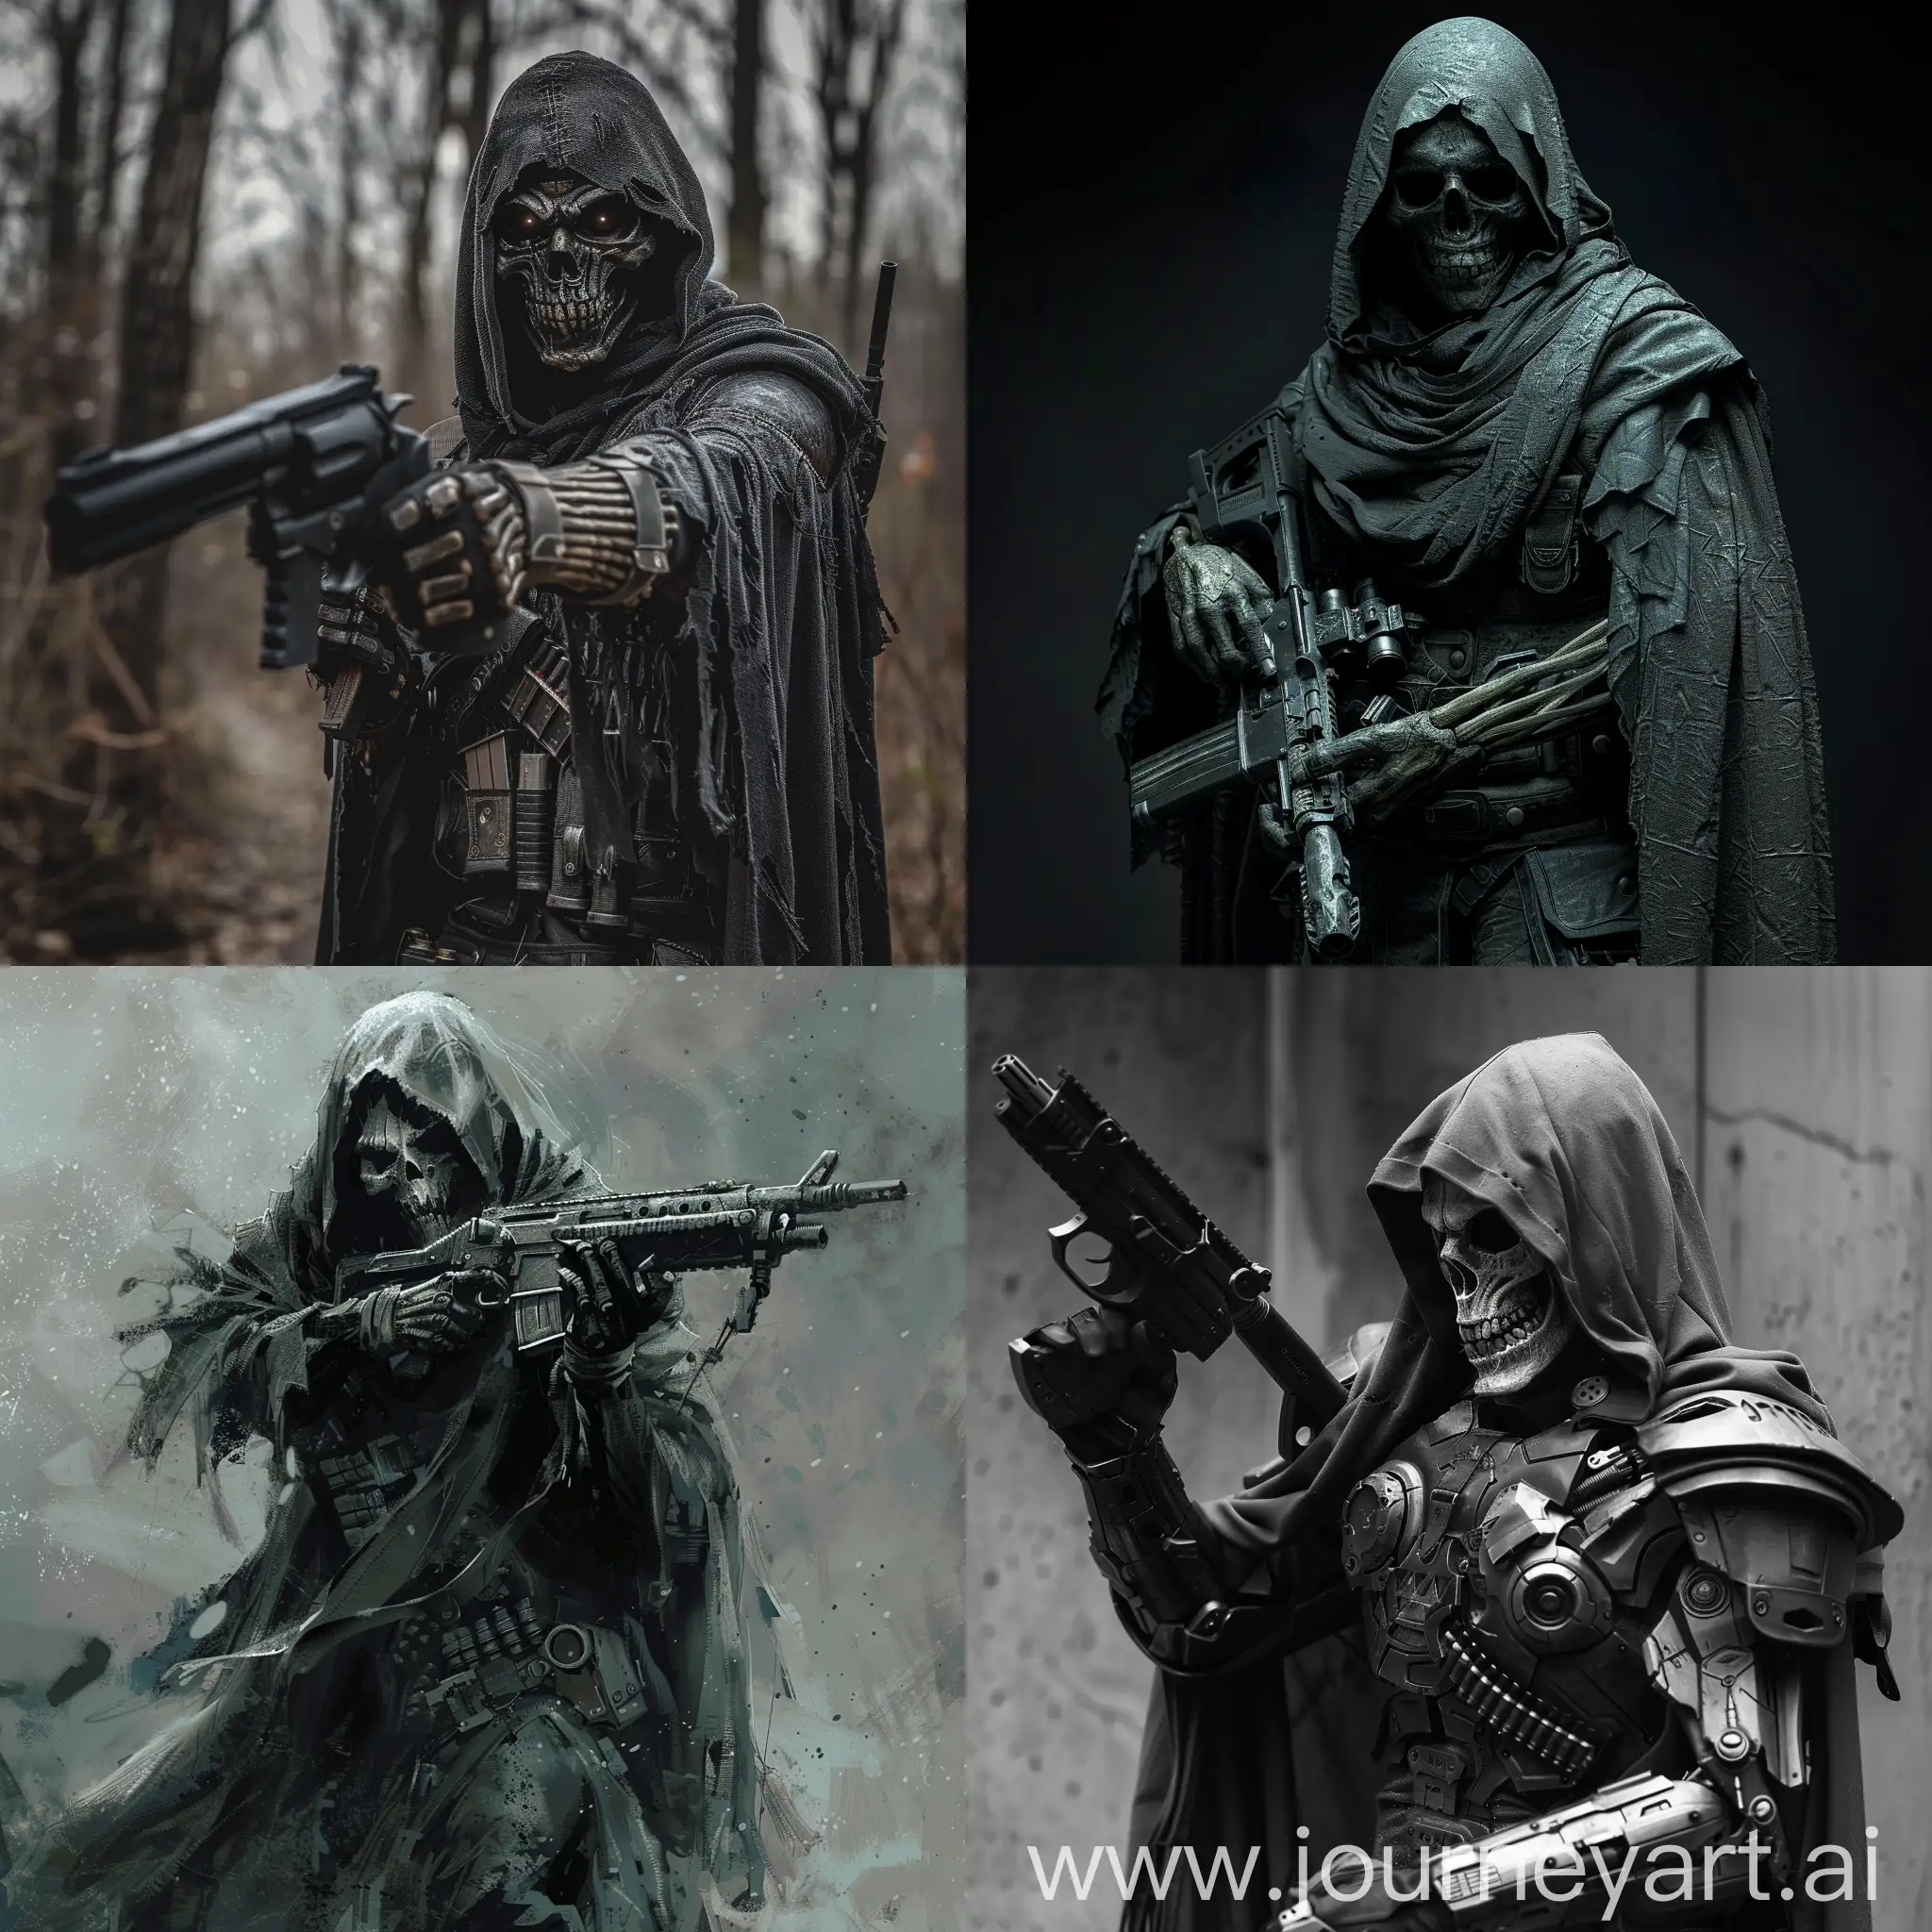 Grim-Reaper-Holding-a-Gun-in-Dark-Surreal-Scene